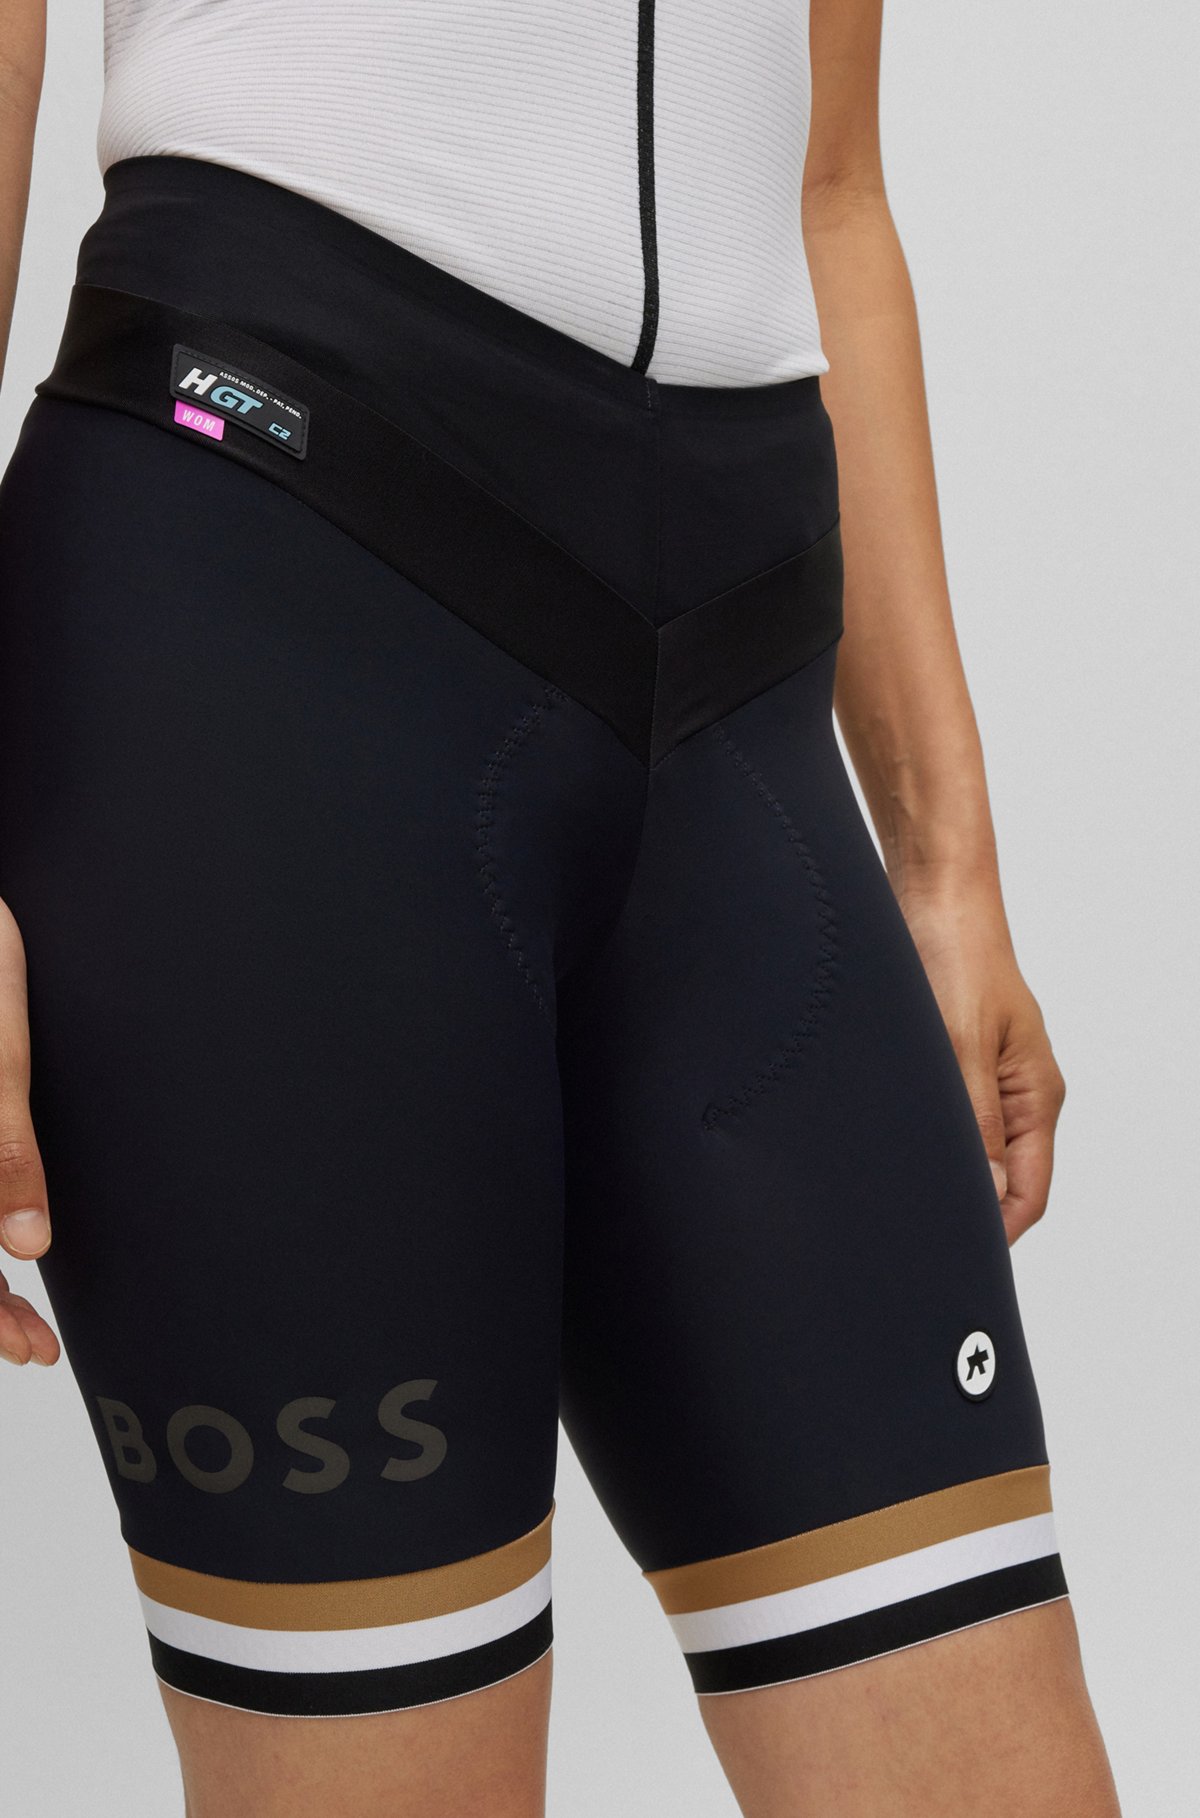 BOSS x ASSOS half shorts with shock-absorbing foam, Black